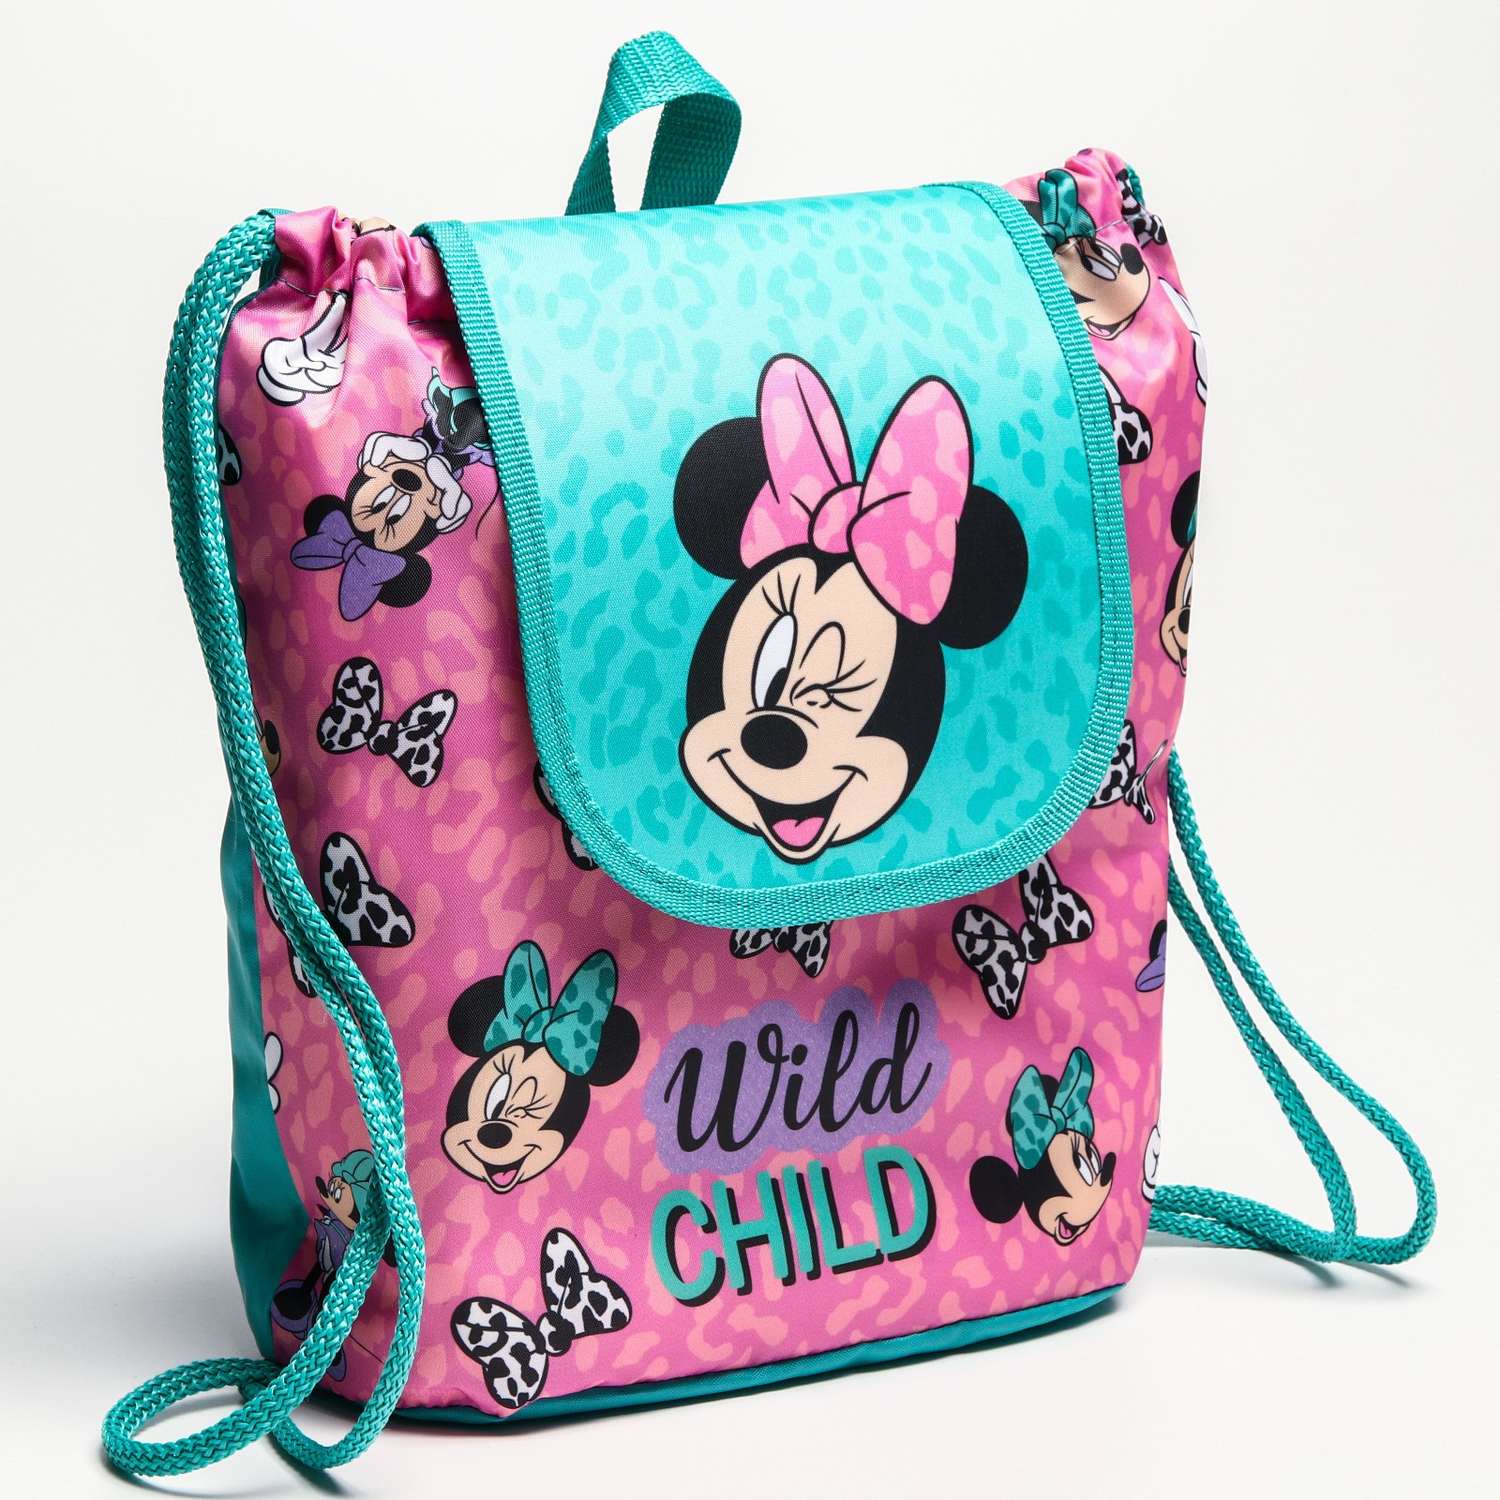 Рюкзак Disney детский СР-01 29*21.5*13.5 Минни Маус «Wild child» - фото 1